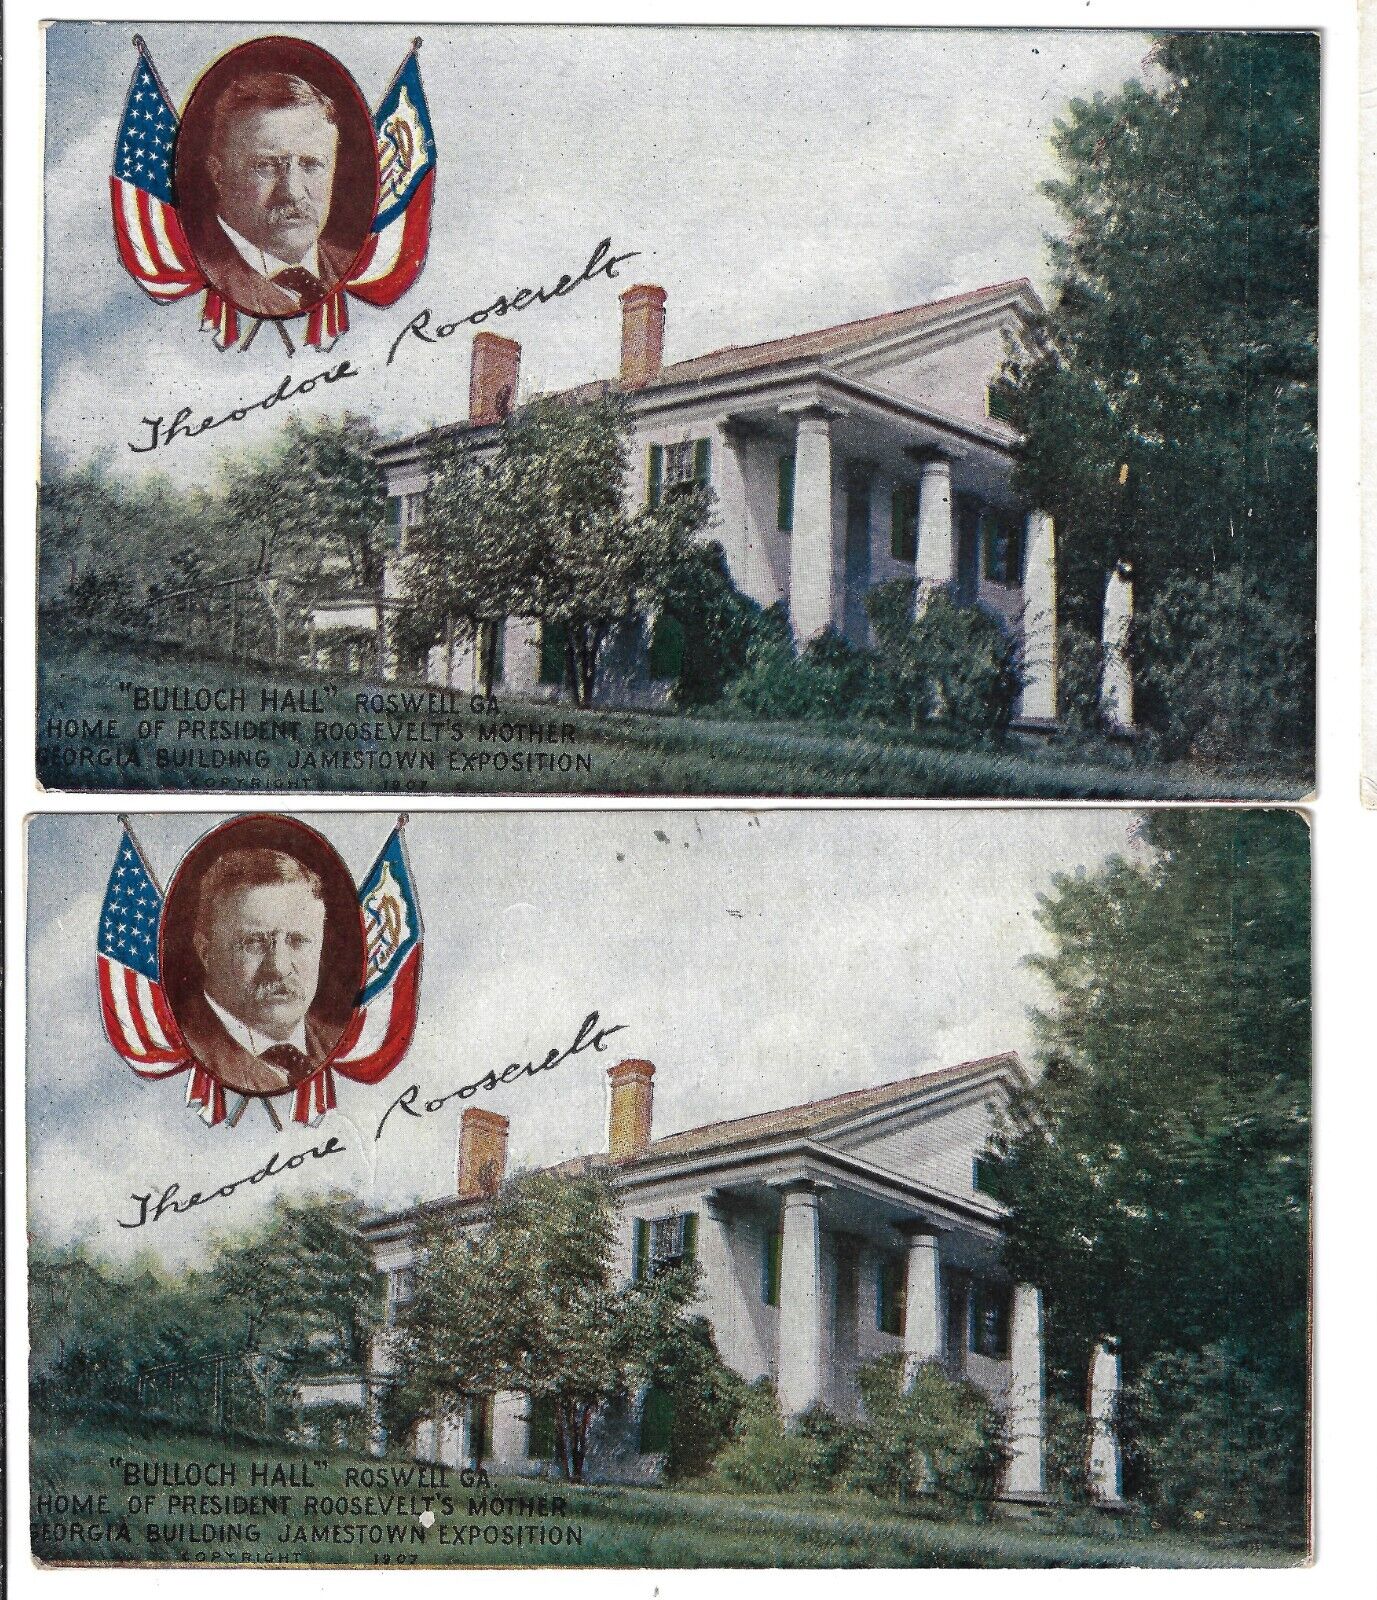 2-T Roosevelt Bullock Hall Roswell GA Postcard Uncle Remus Poem 07 Jamestown Exp